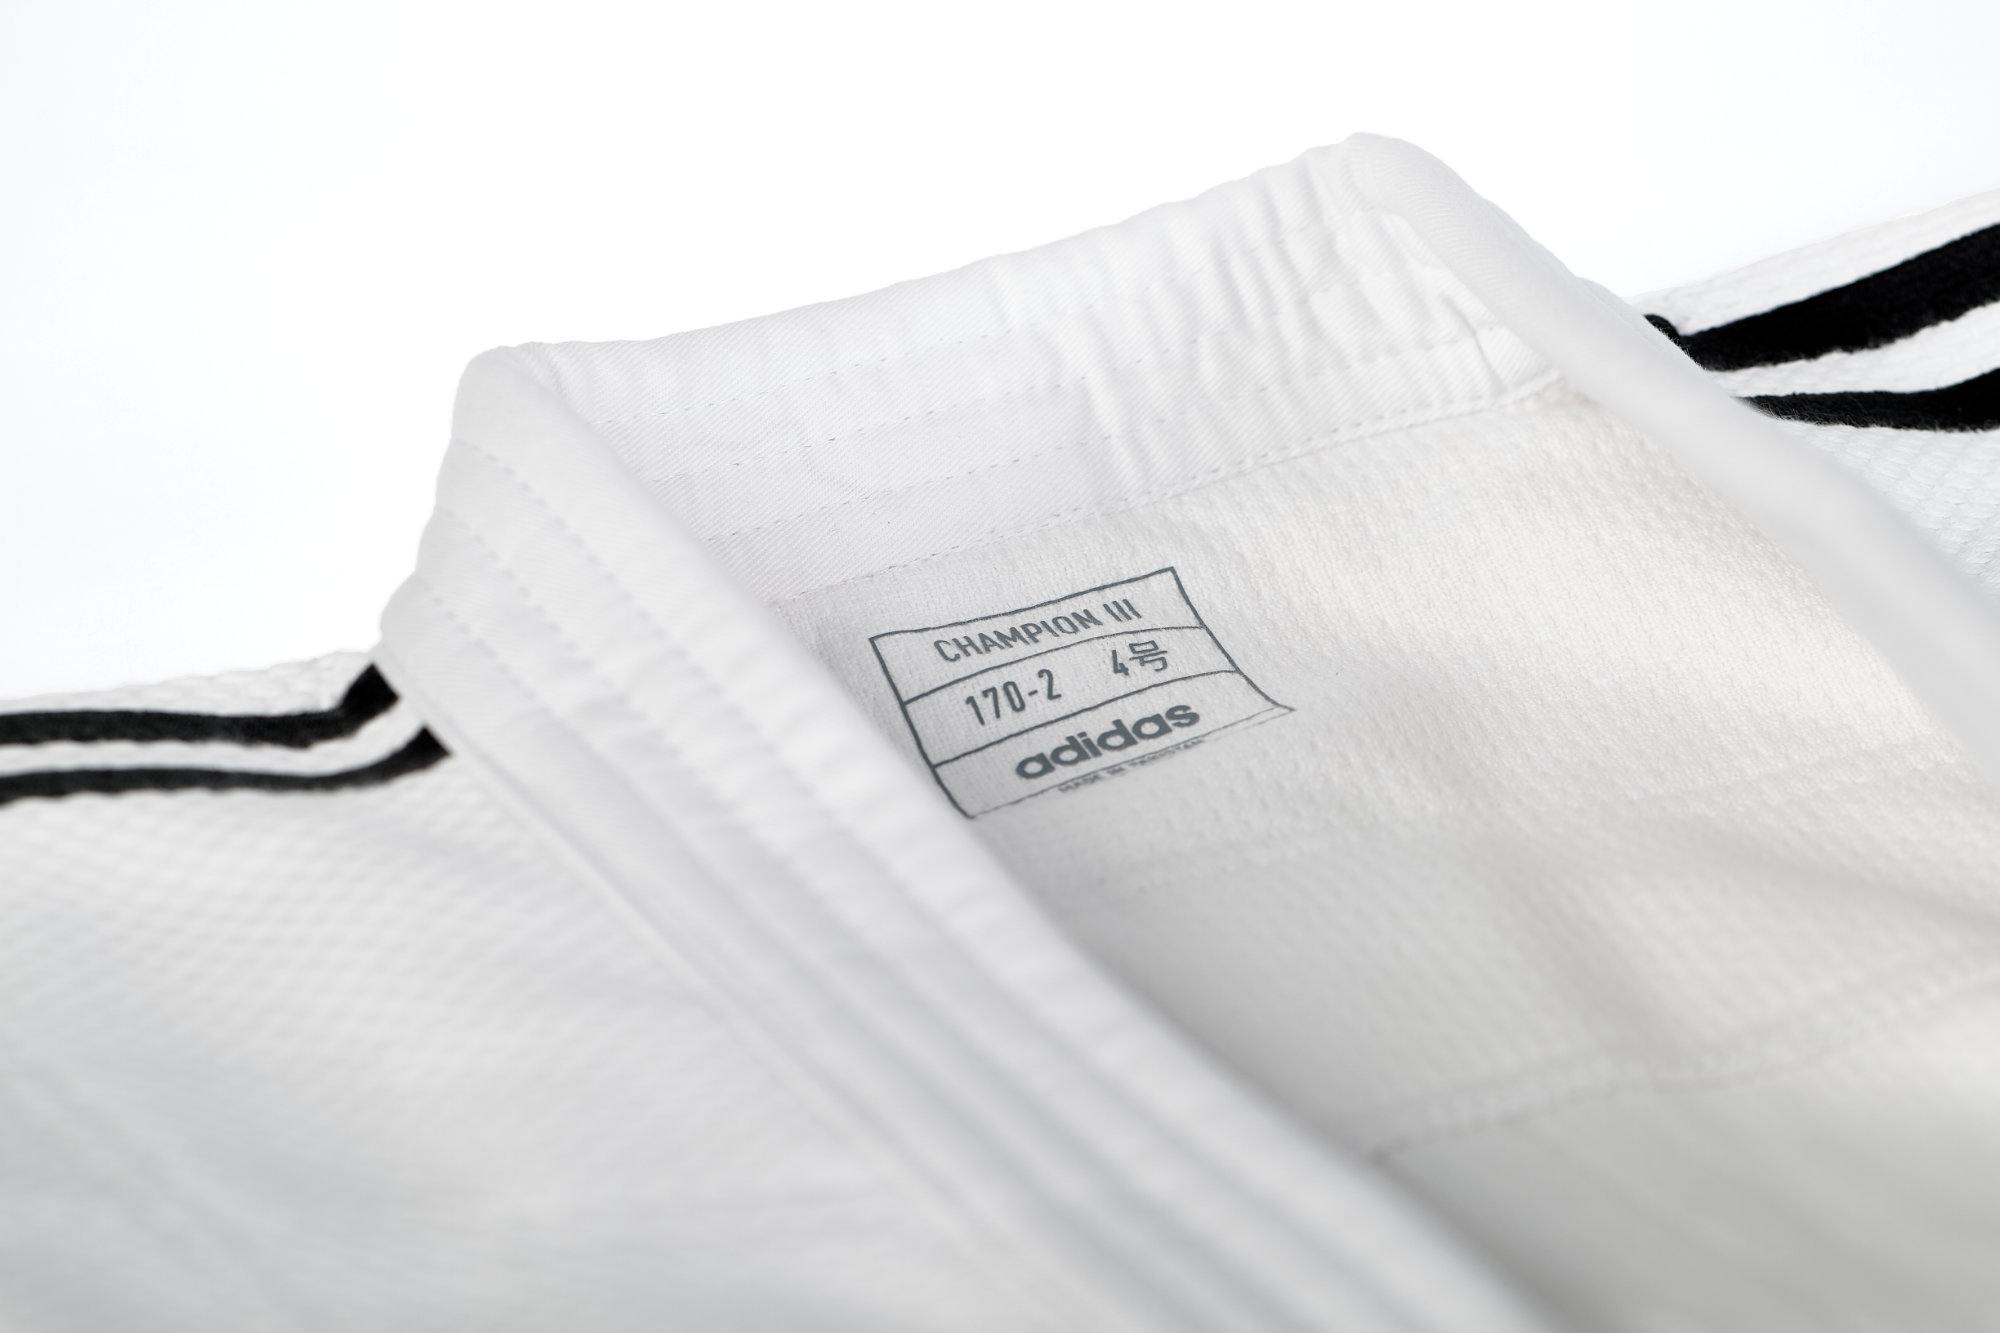 adidas judo jacket Champion III JIJF-JAC-1 white / black stripes slim cut